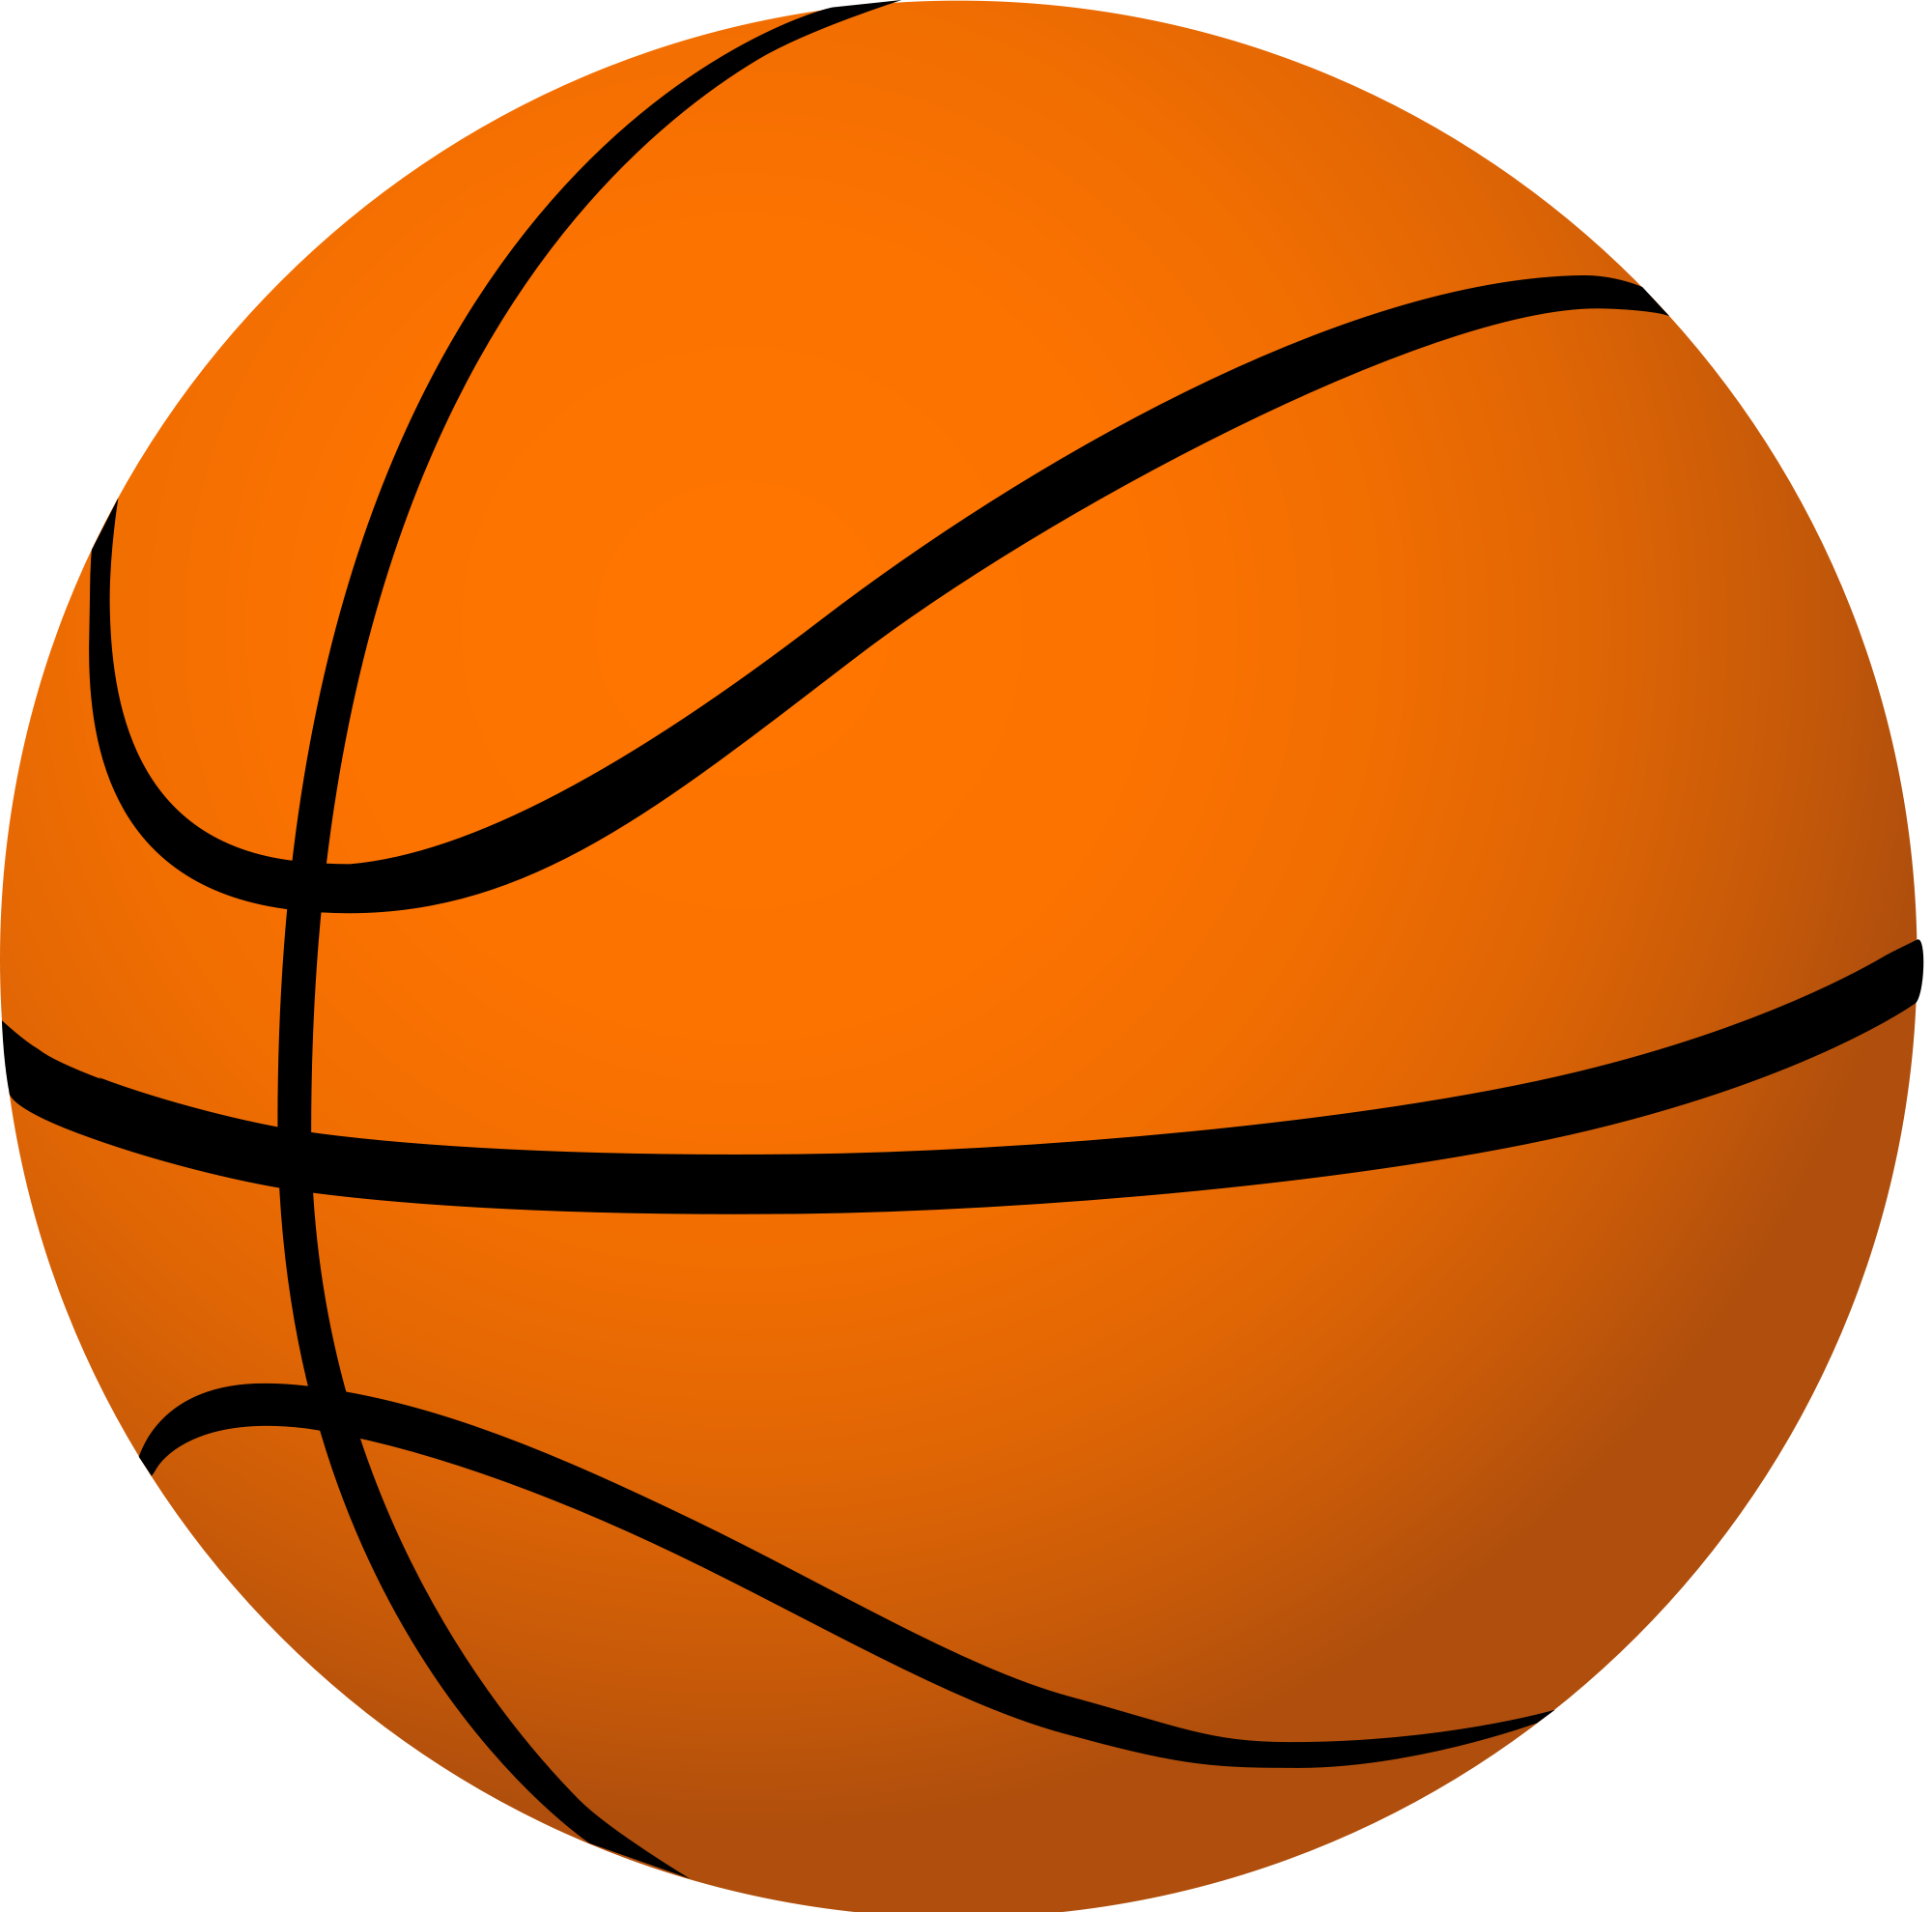 Basketball clip art download